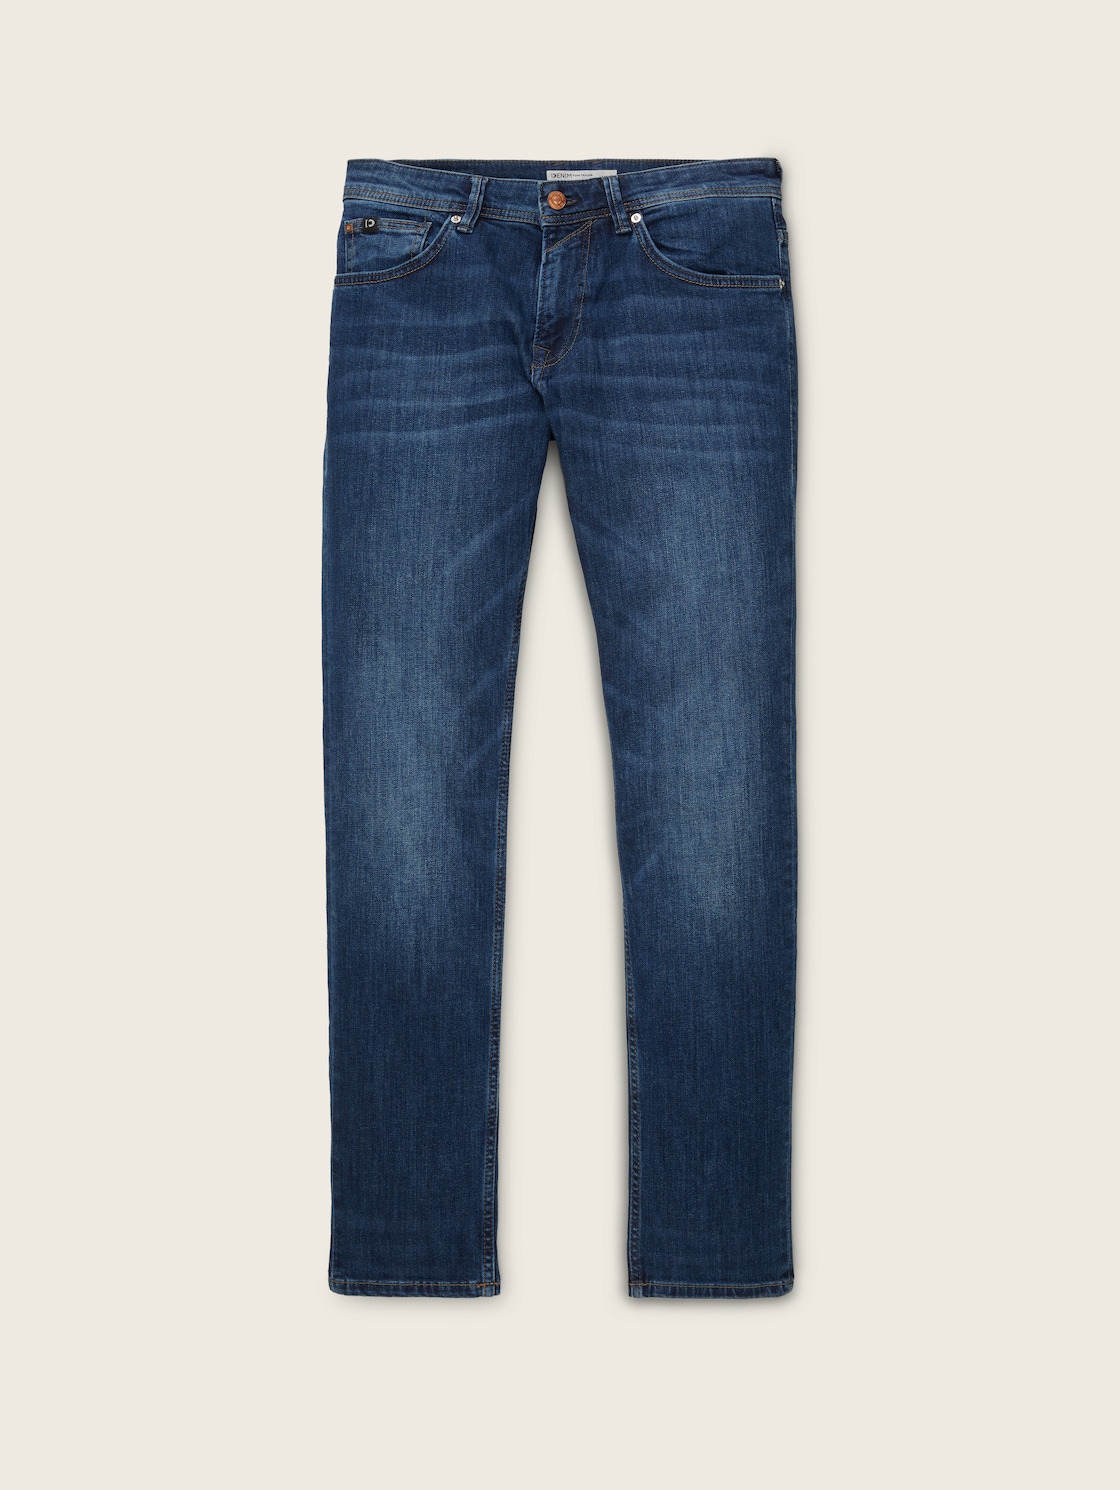 TOM TAILOR DENIM Herren Aedan Straight Jeans, blau, Logo Print, Gr. 36/34 von Tom Tailor Denim